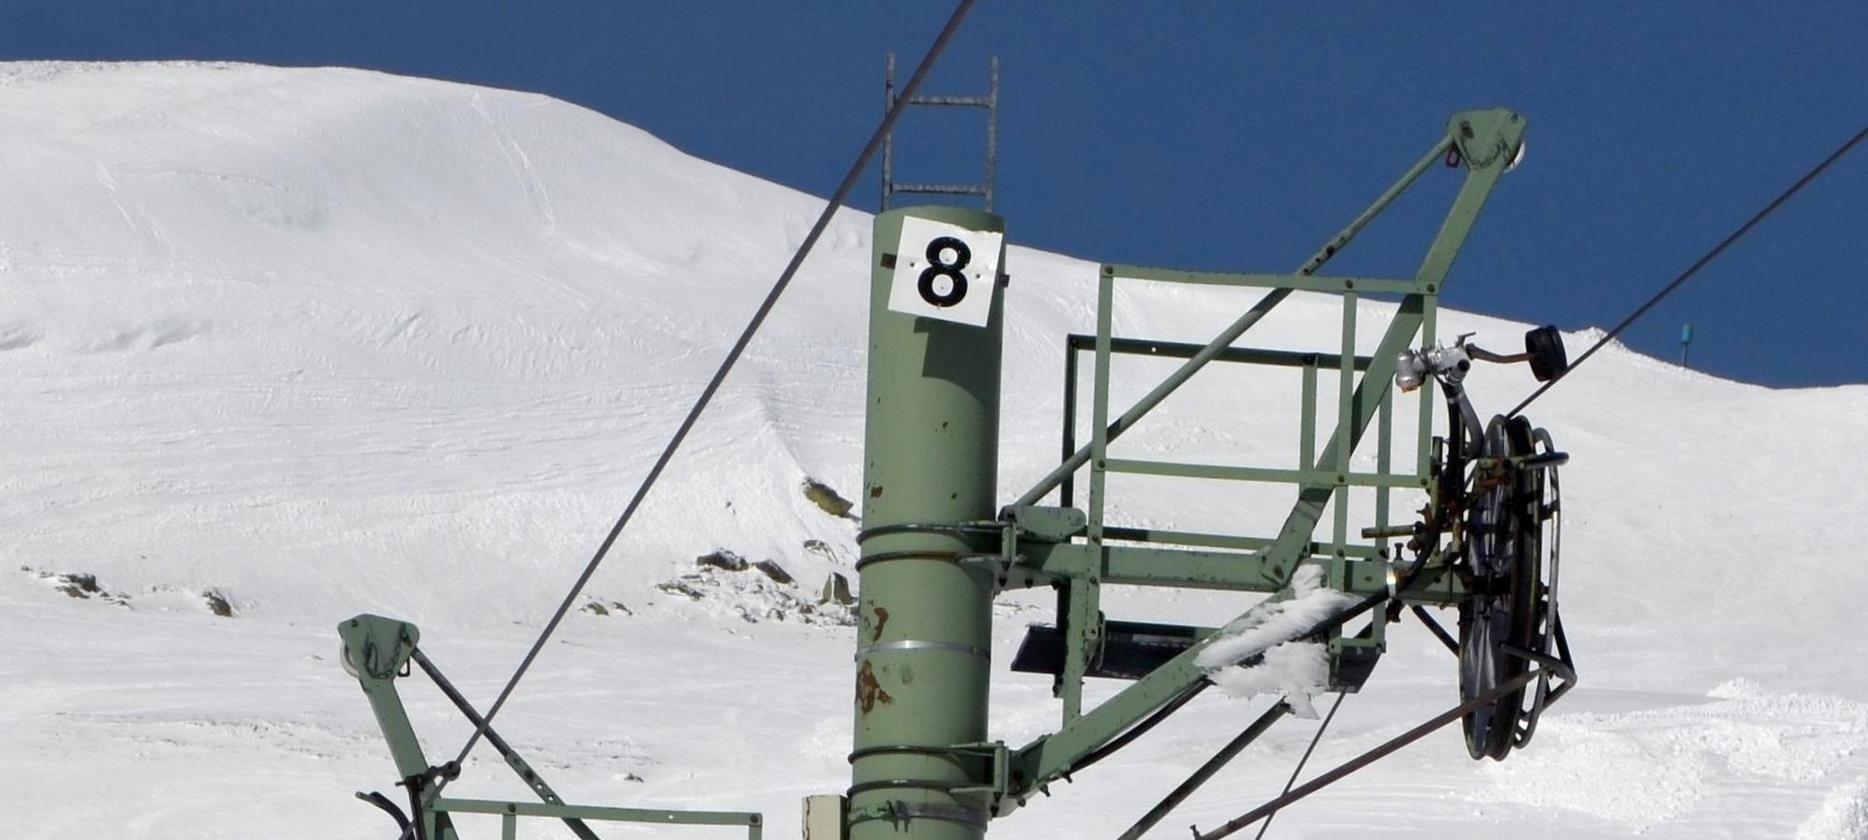 Super Besse - ski lift departure